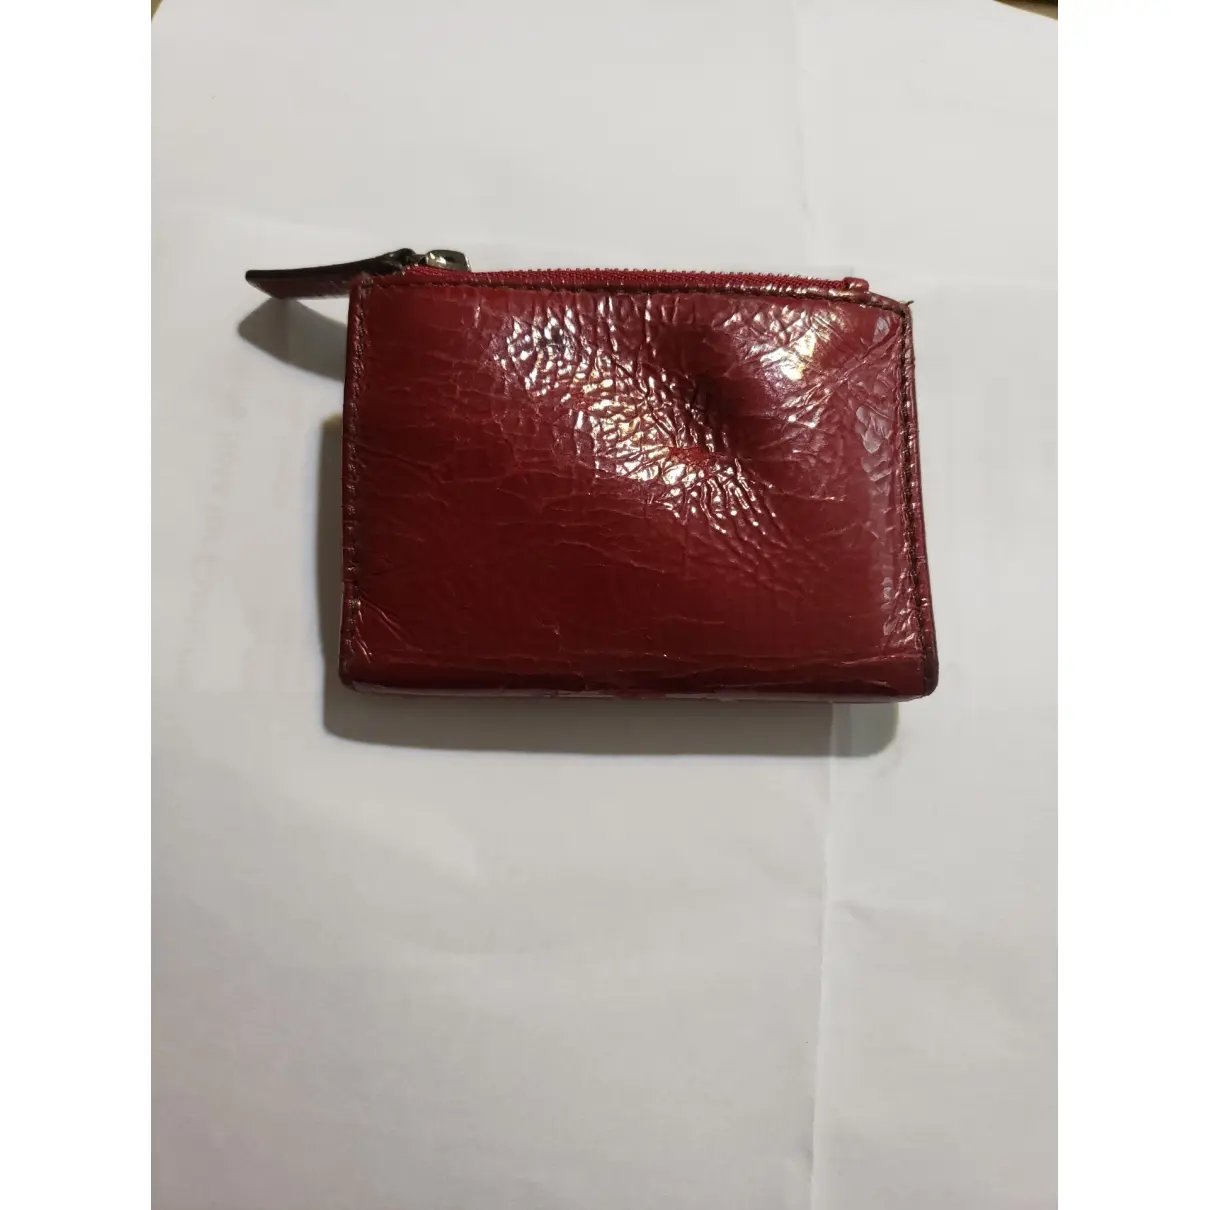 Loewe Patent leather wallet for sale - Vintage